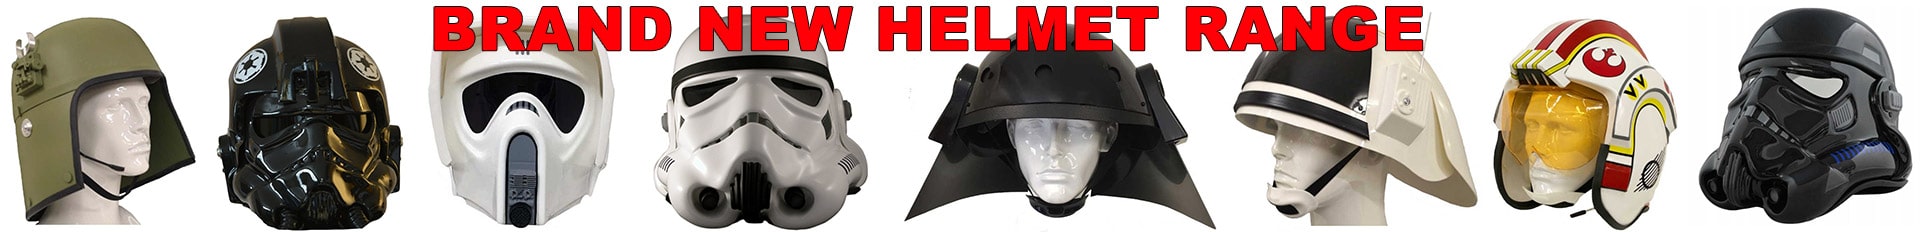 Brand New Star Wars Helmet Range